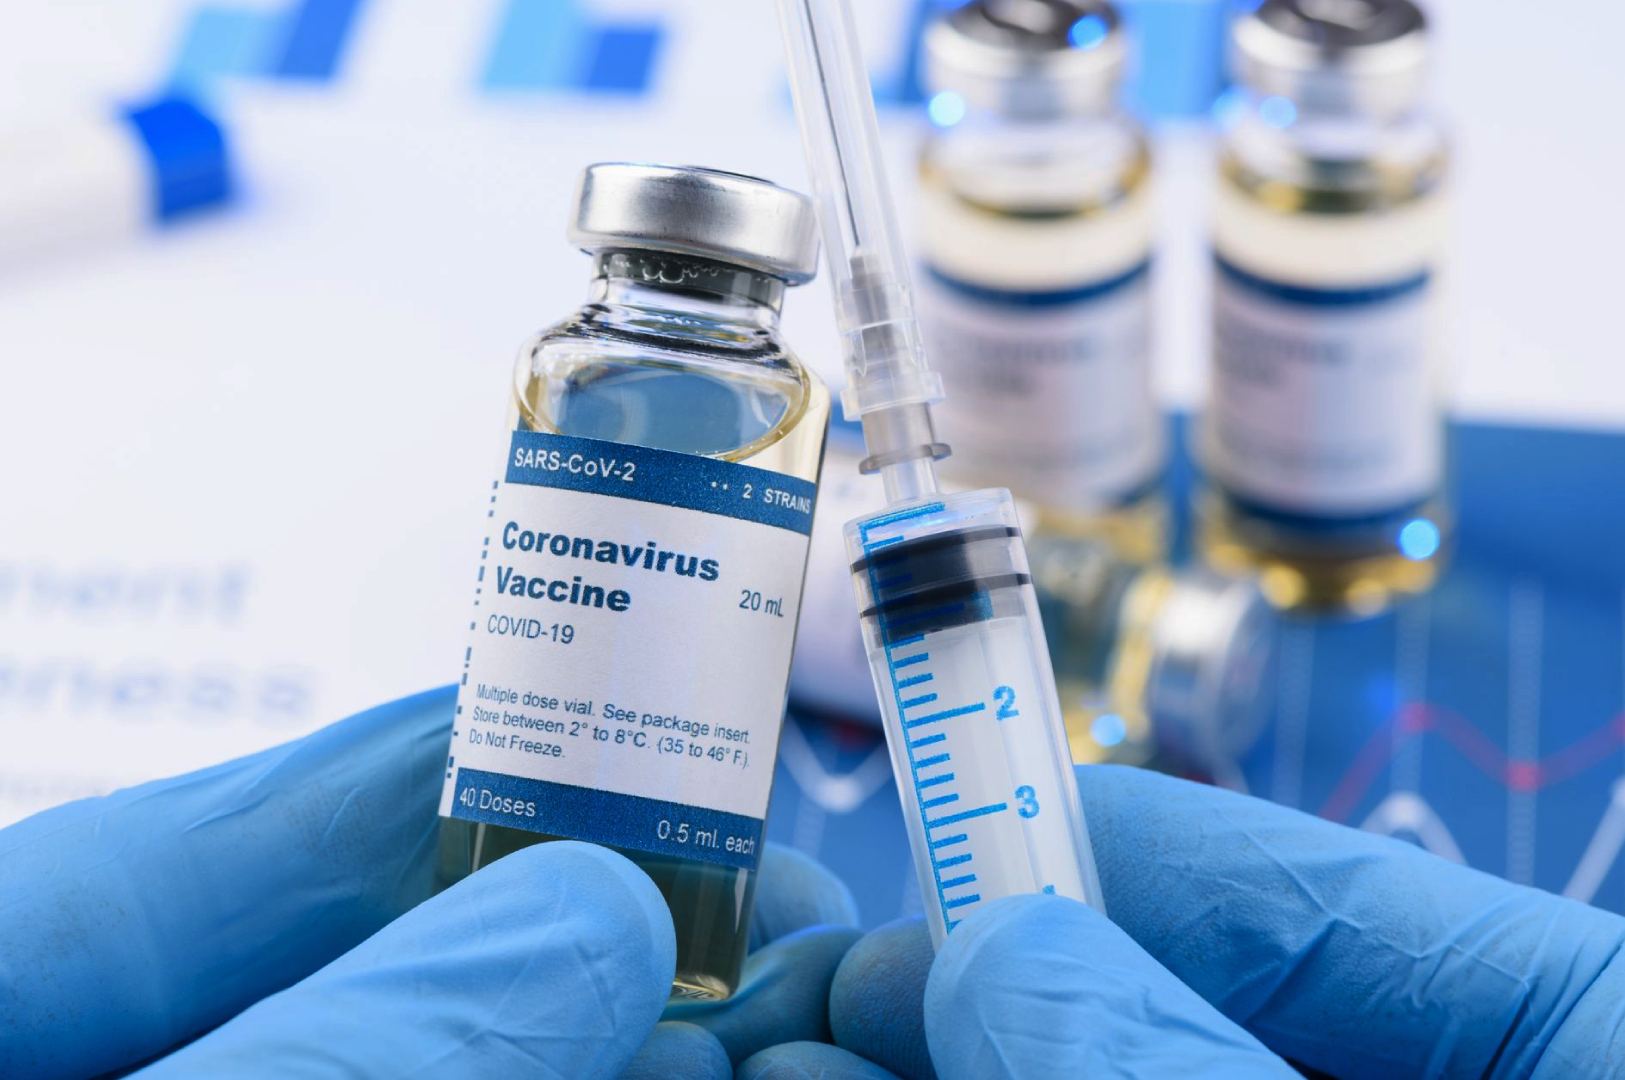 UK To Infect Volunteers With Coronavirus For Vaccine Trial